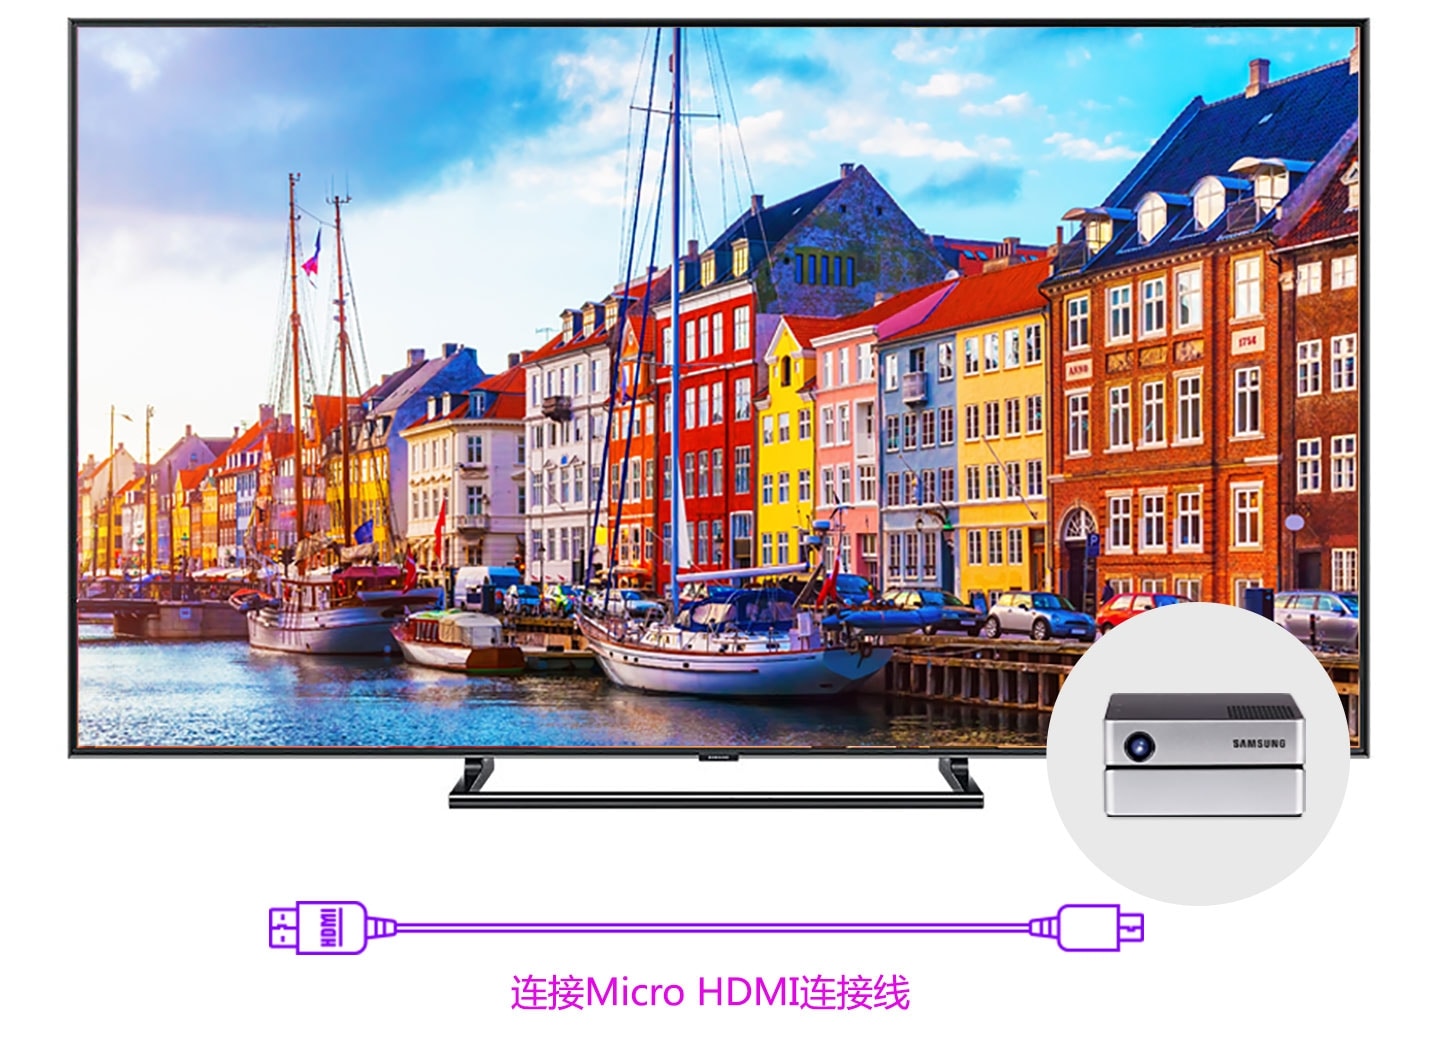 ※ Micro HDMI连接线是单独销售商品。